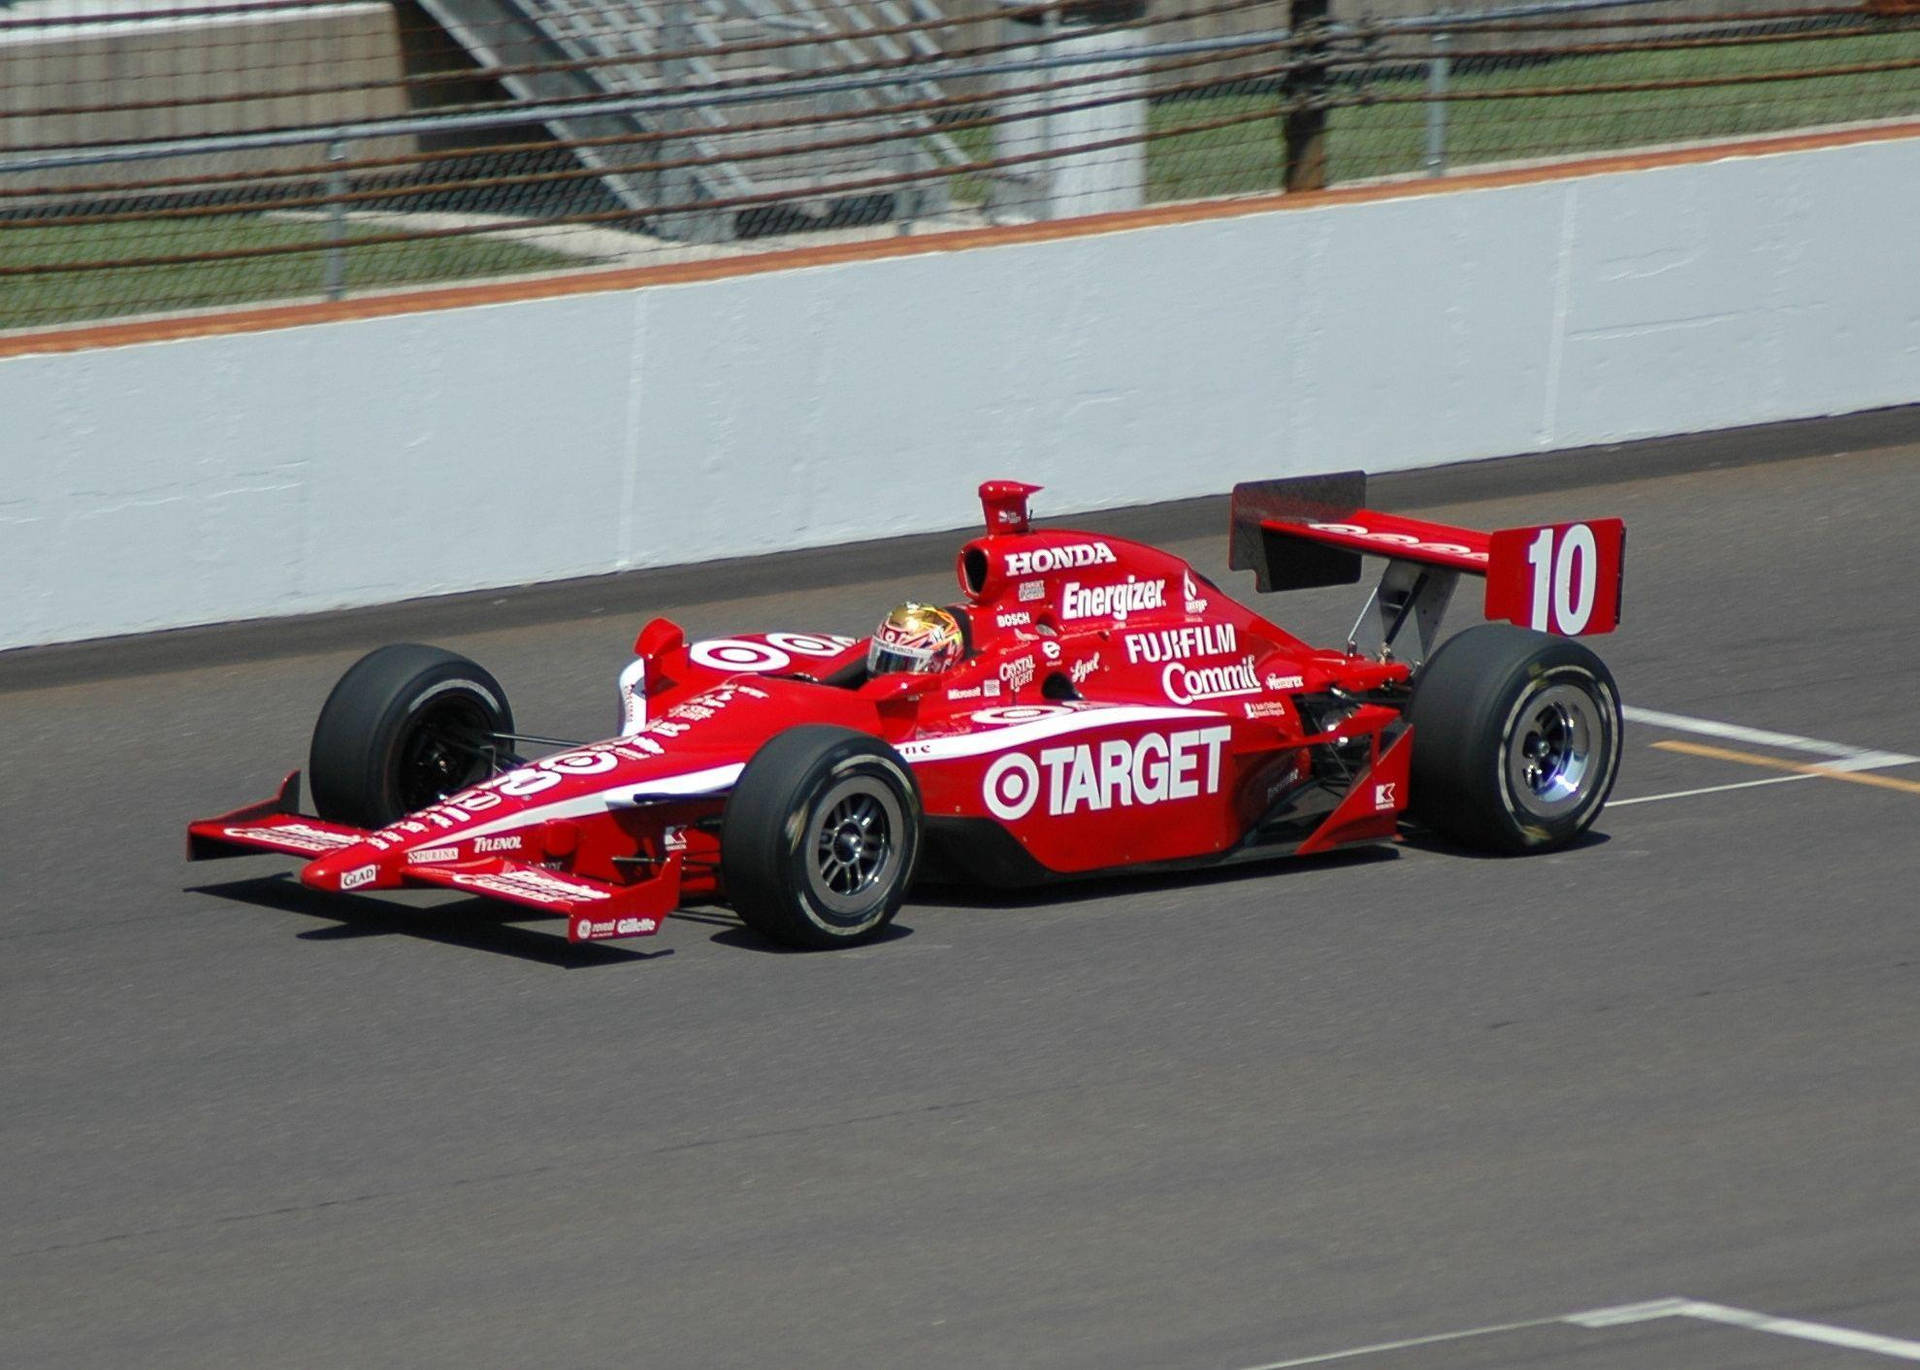 Red Indianapolis 500 Racing Car Wallpaper